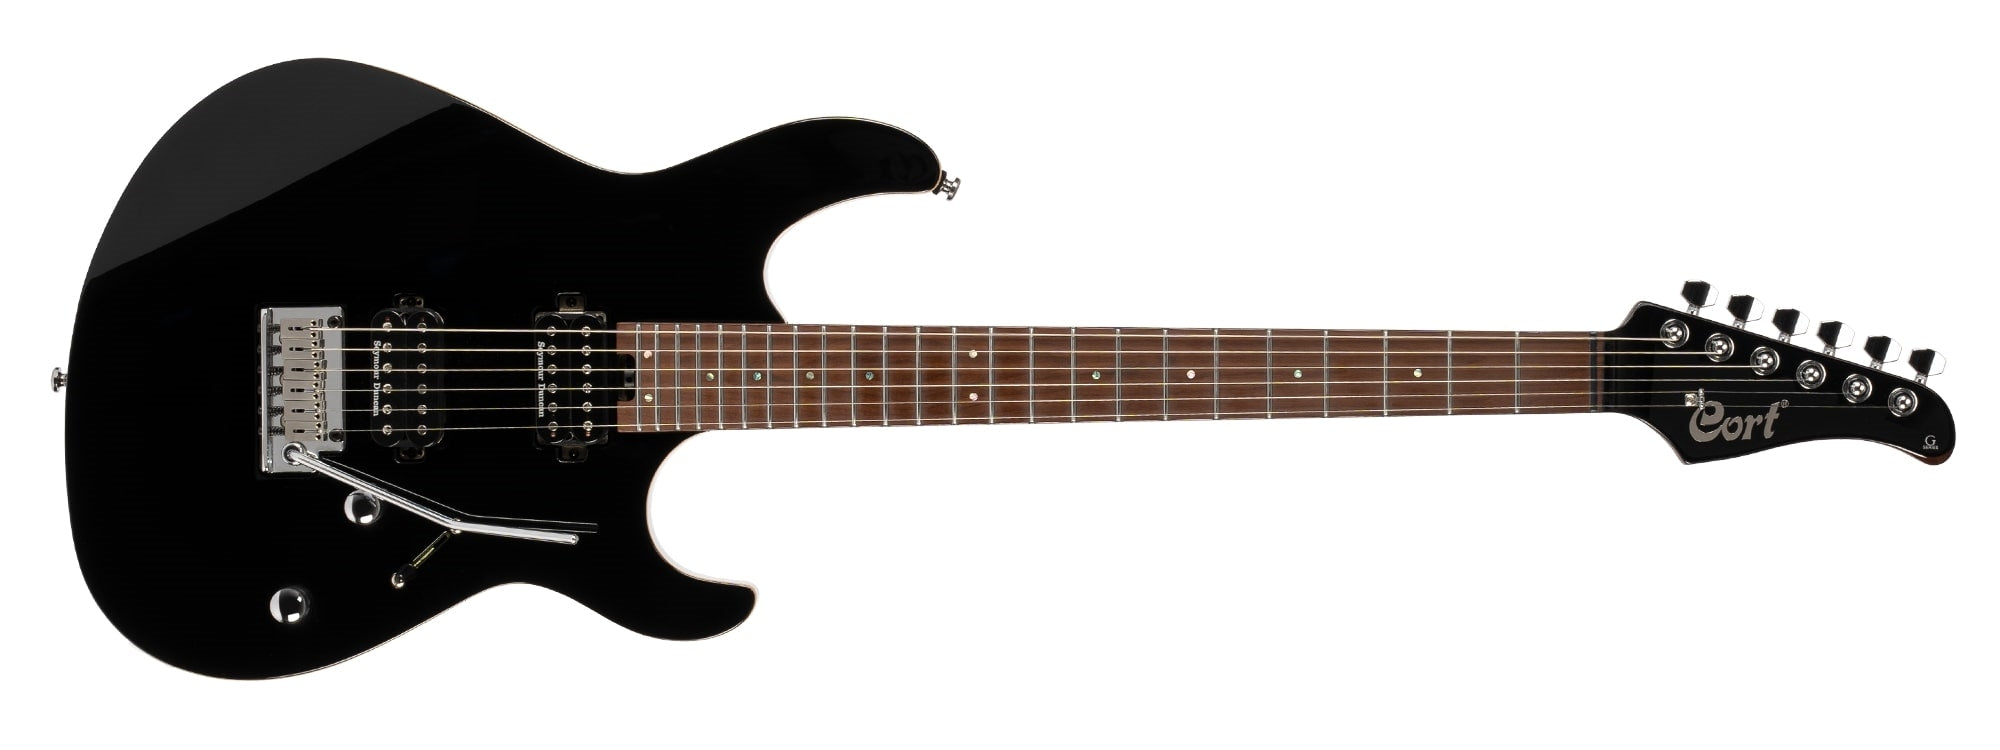 Cort - G300 Pro Electric Guitar - Black - G300-PRO-BK ...